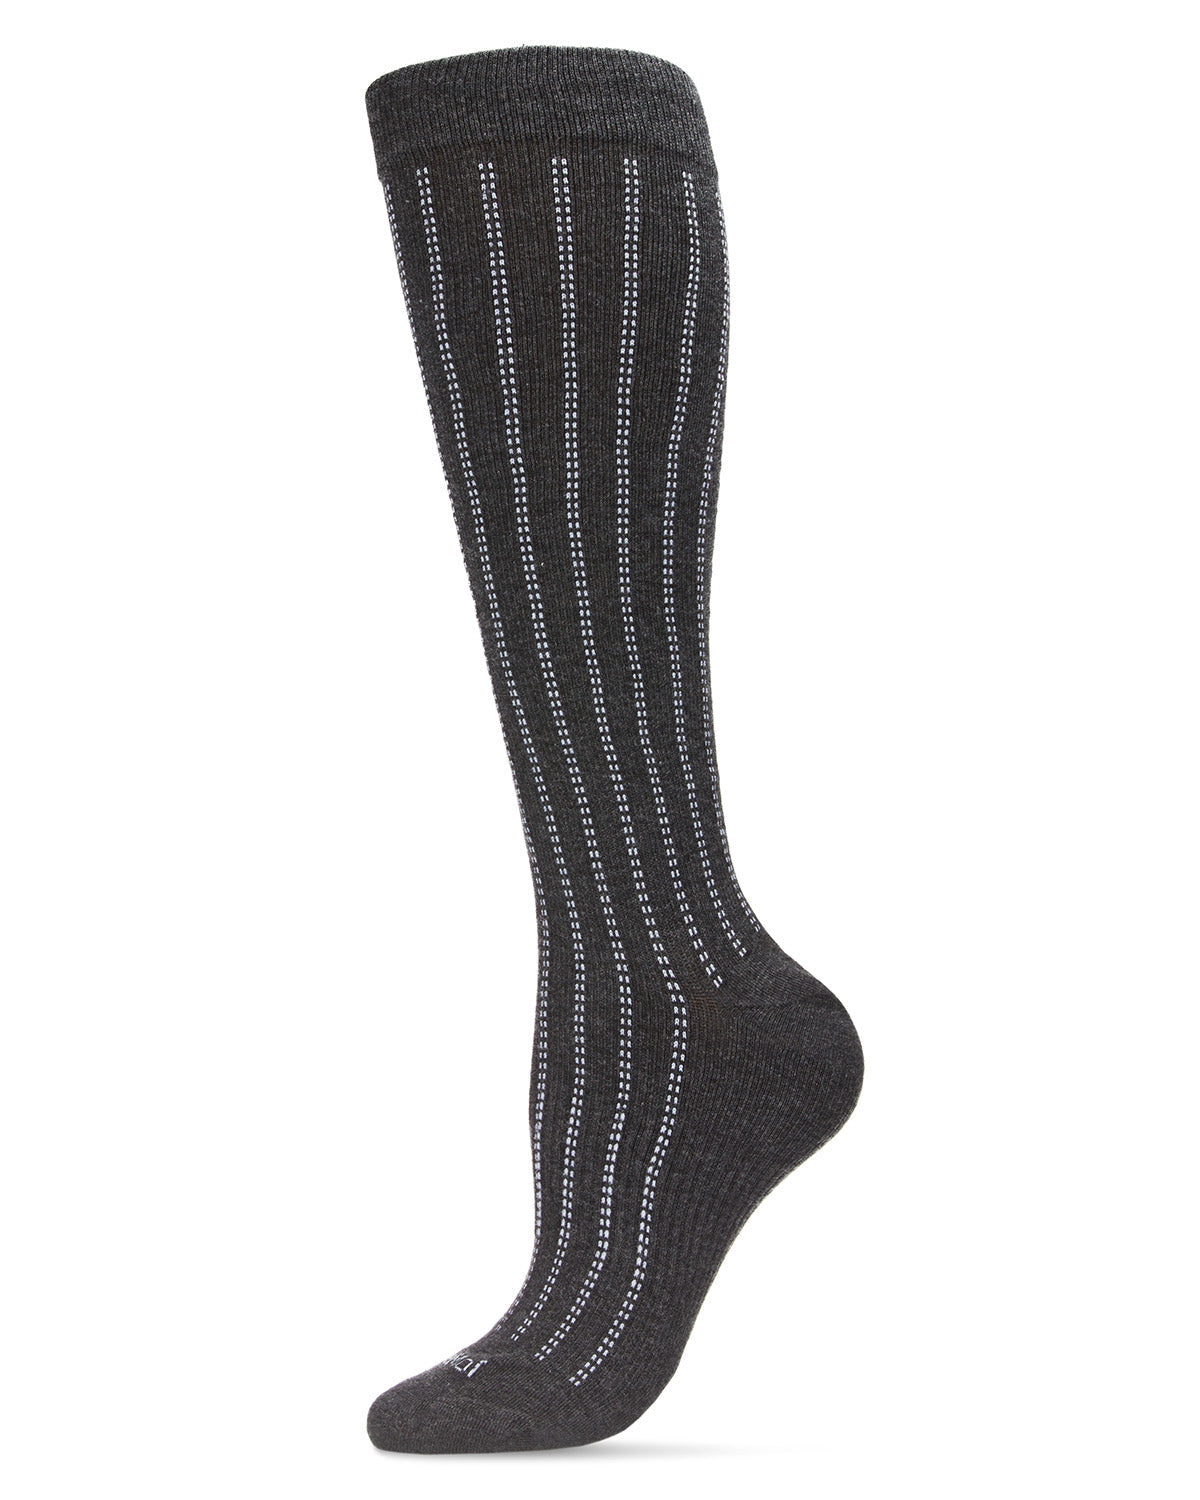 Unisex Highway Stripe Cotton Blend 15-20mmHg Graduated Compression Socks